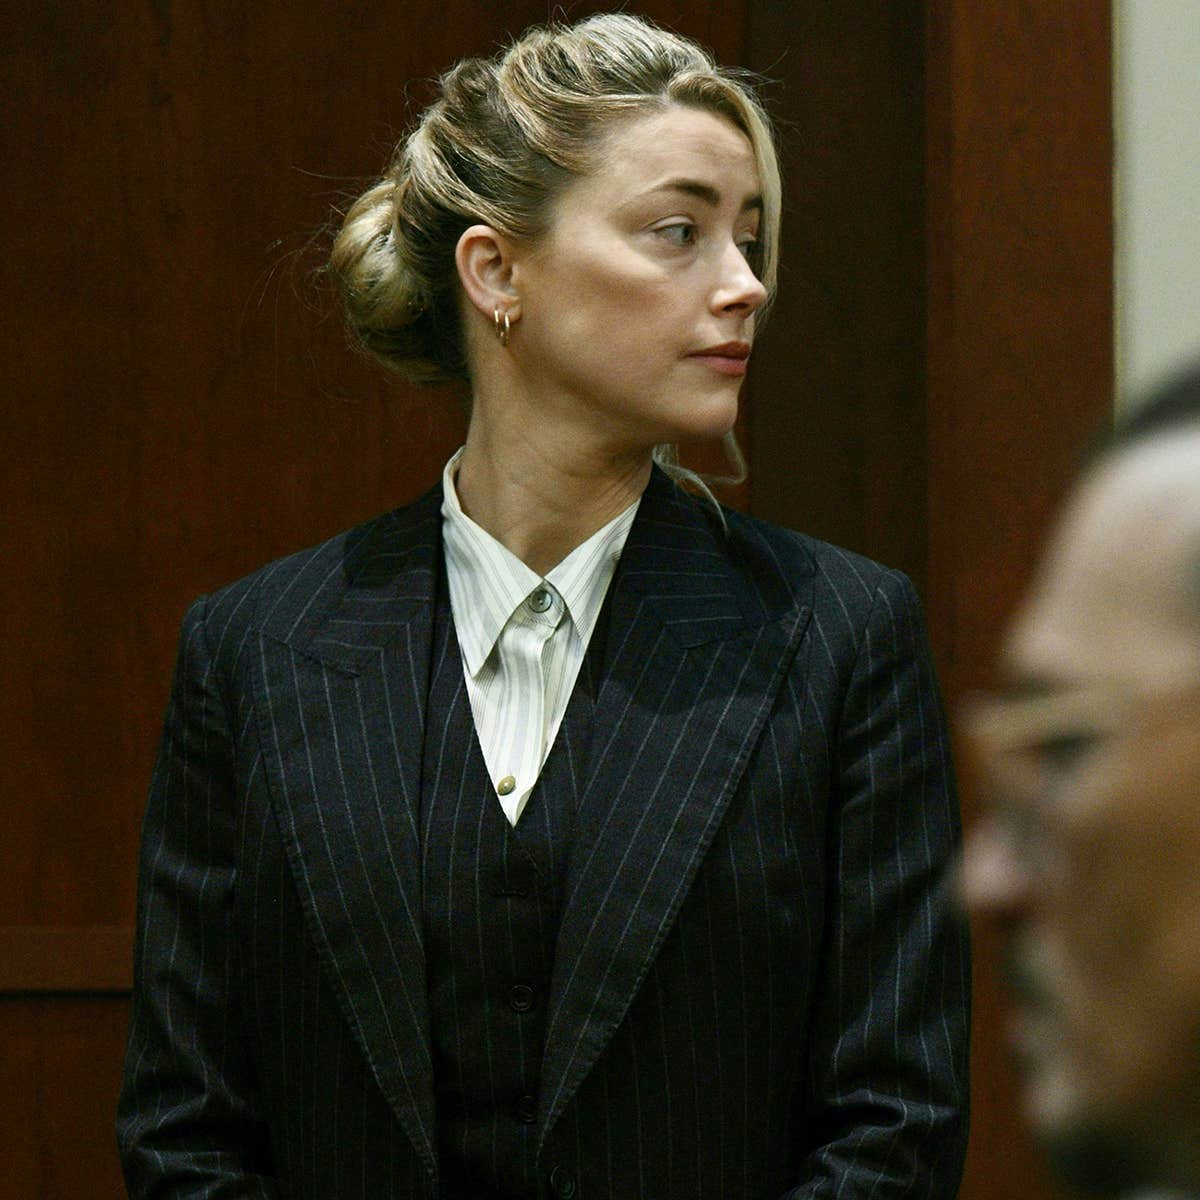 Johny Sex Rape - Amber Heard Johnny Depp Trial Winner Not Who You Think